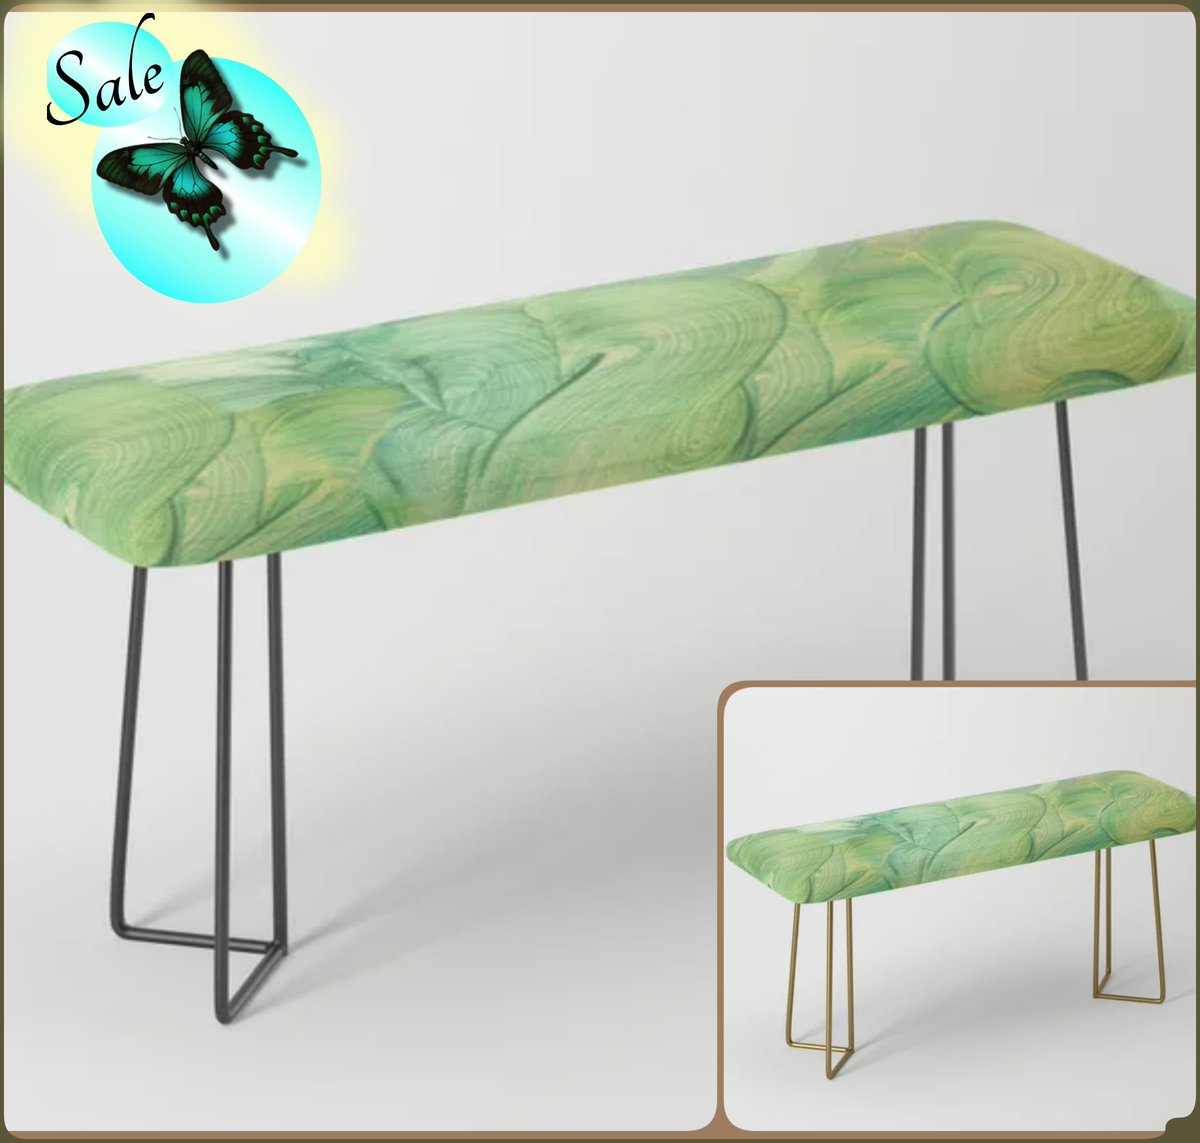 *SALE 10% Off*
Amphitrite Bench#artfalaxy #art #furniture #benches #stools #designs #floral #homedecor #society6 #Society6max #blue #green #yellow

society6.com/product/amphit…